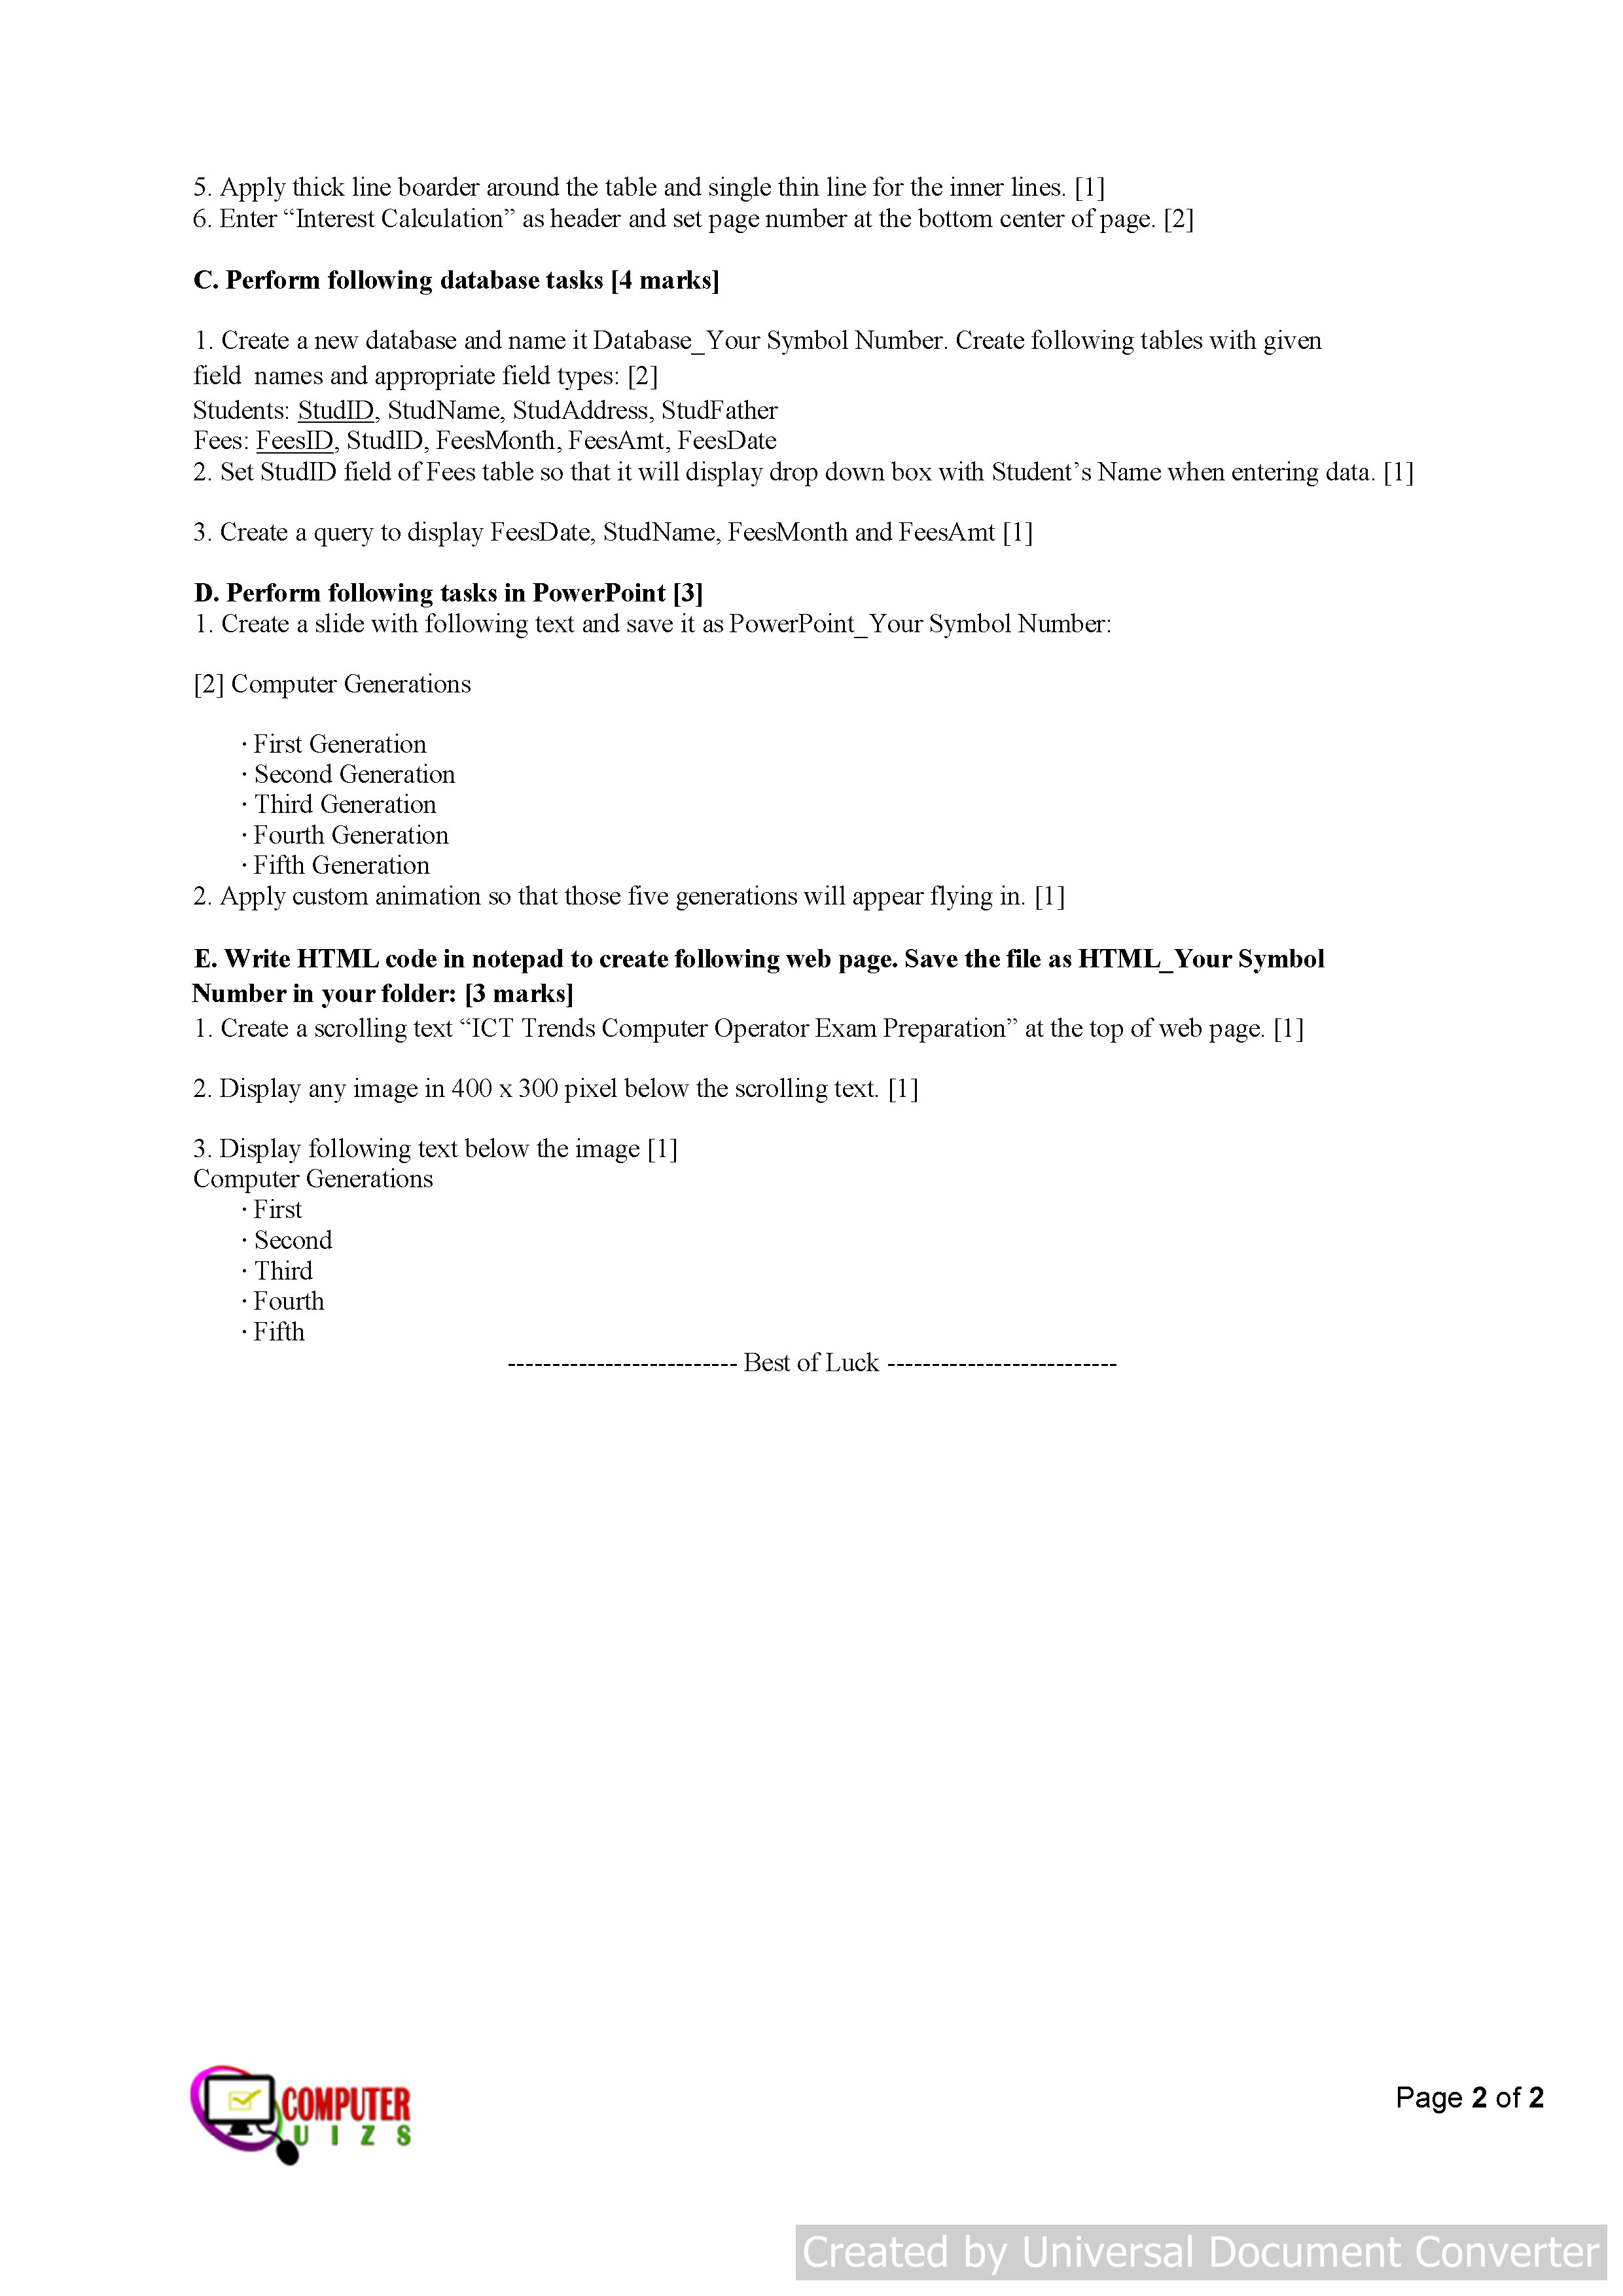 Computer-practical-test-questions-pdf-1